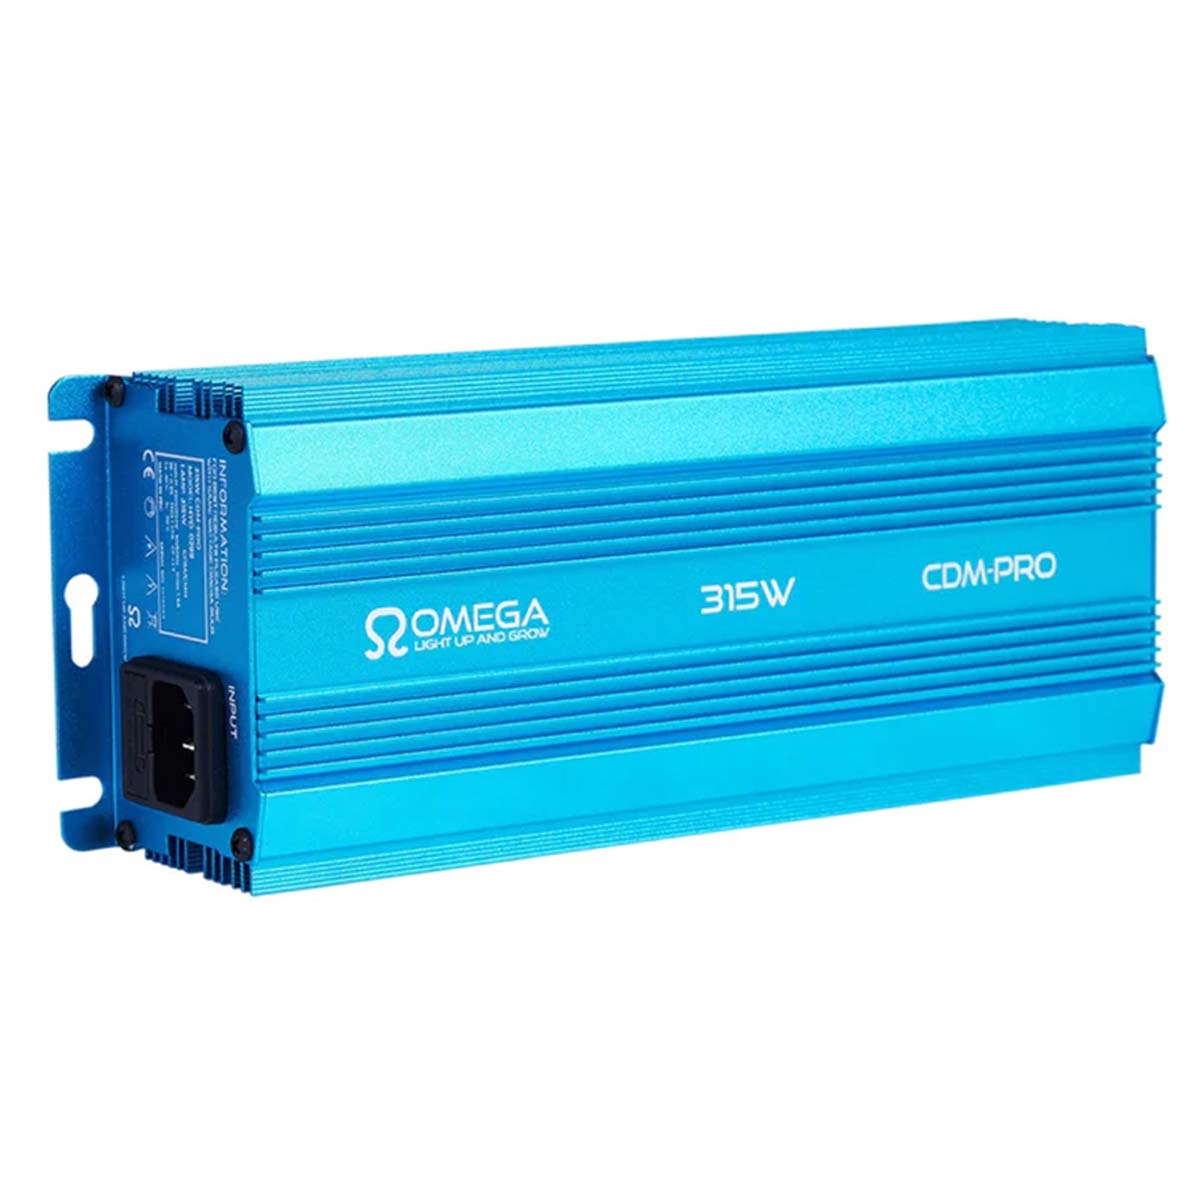 315 Watt Omega CDM Grow Light Kit